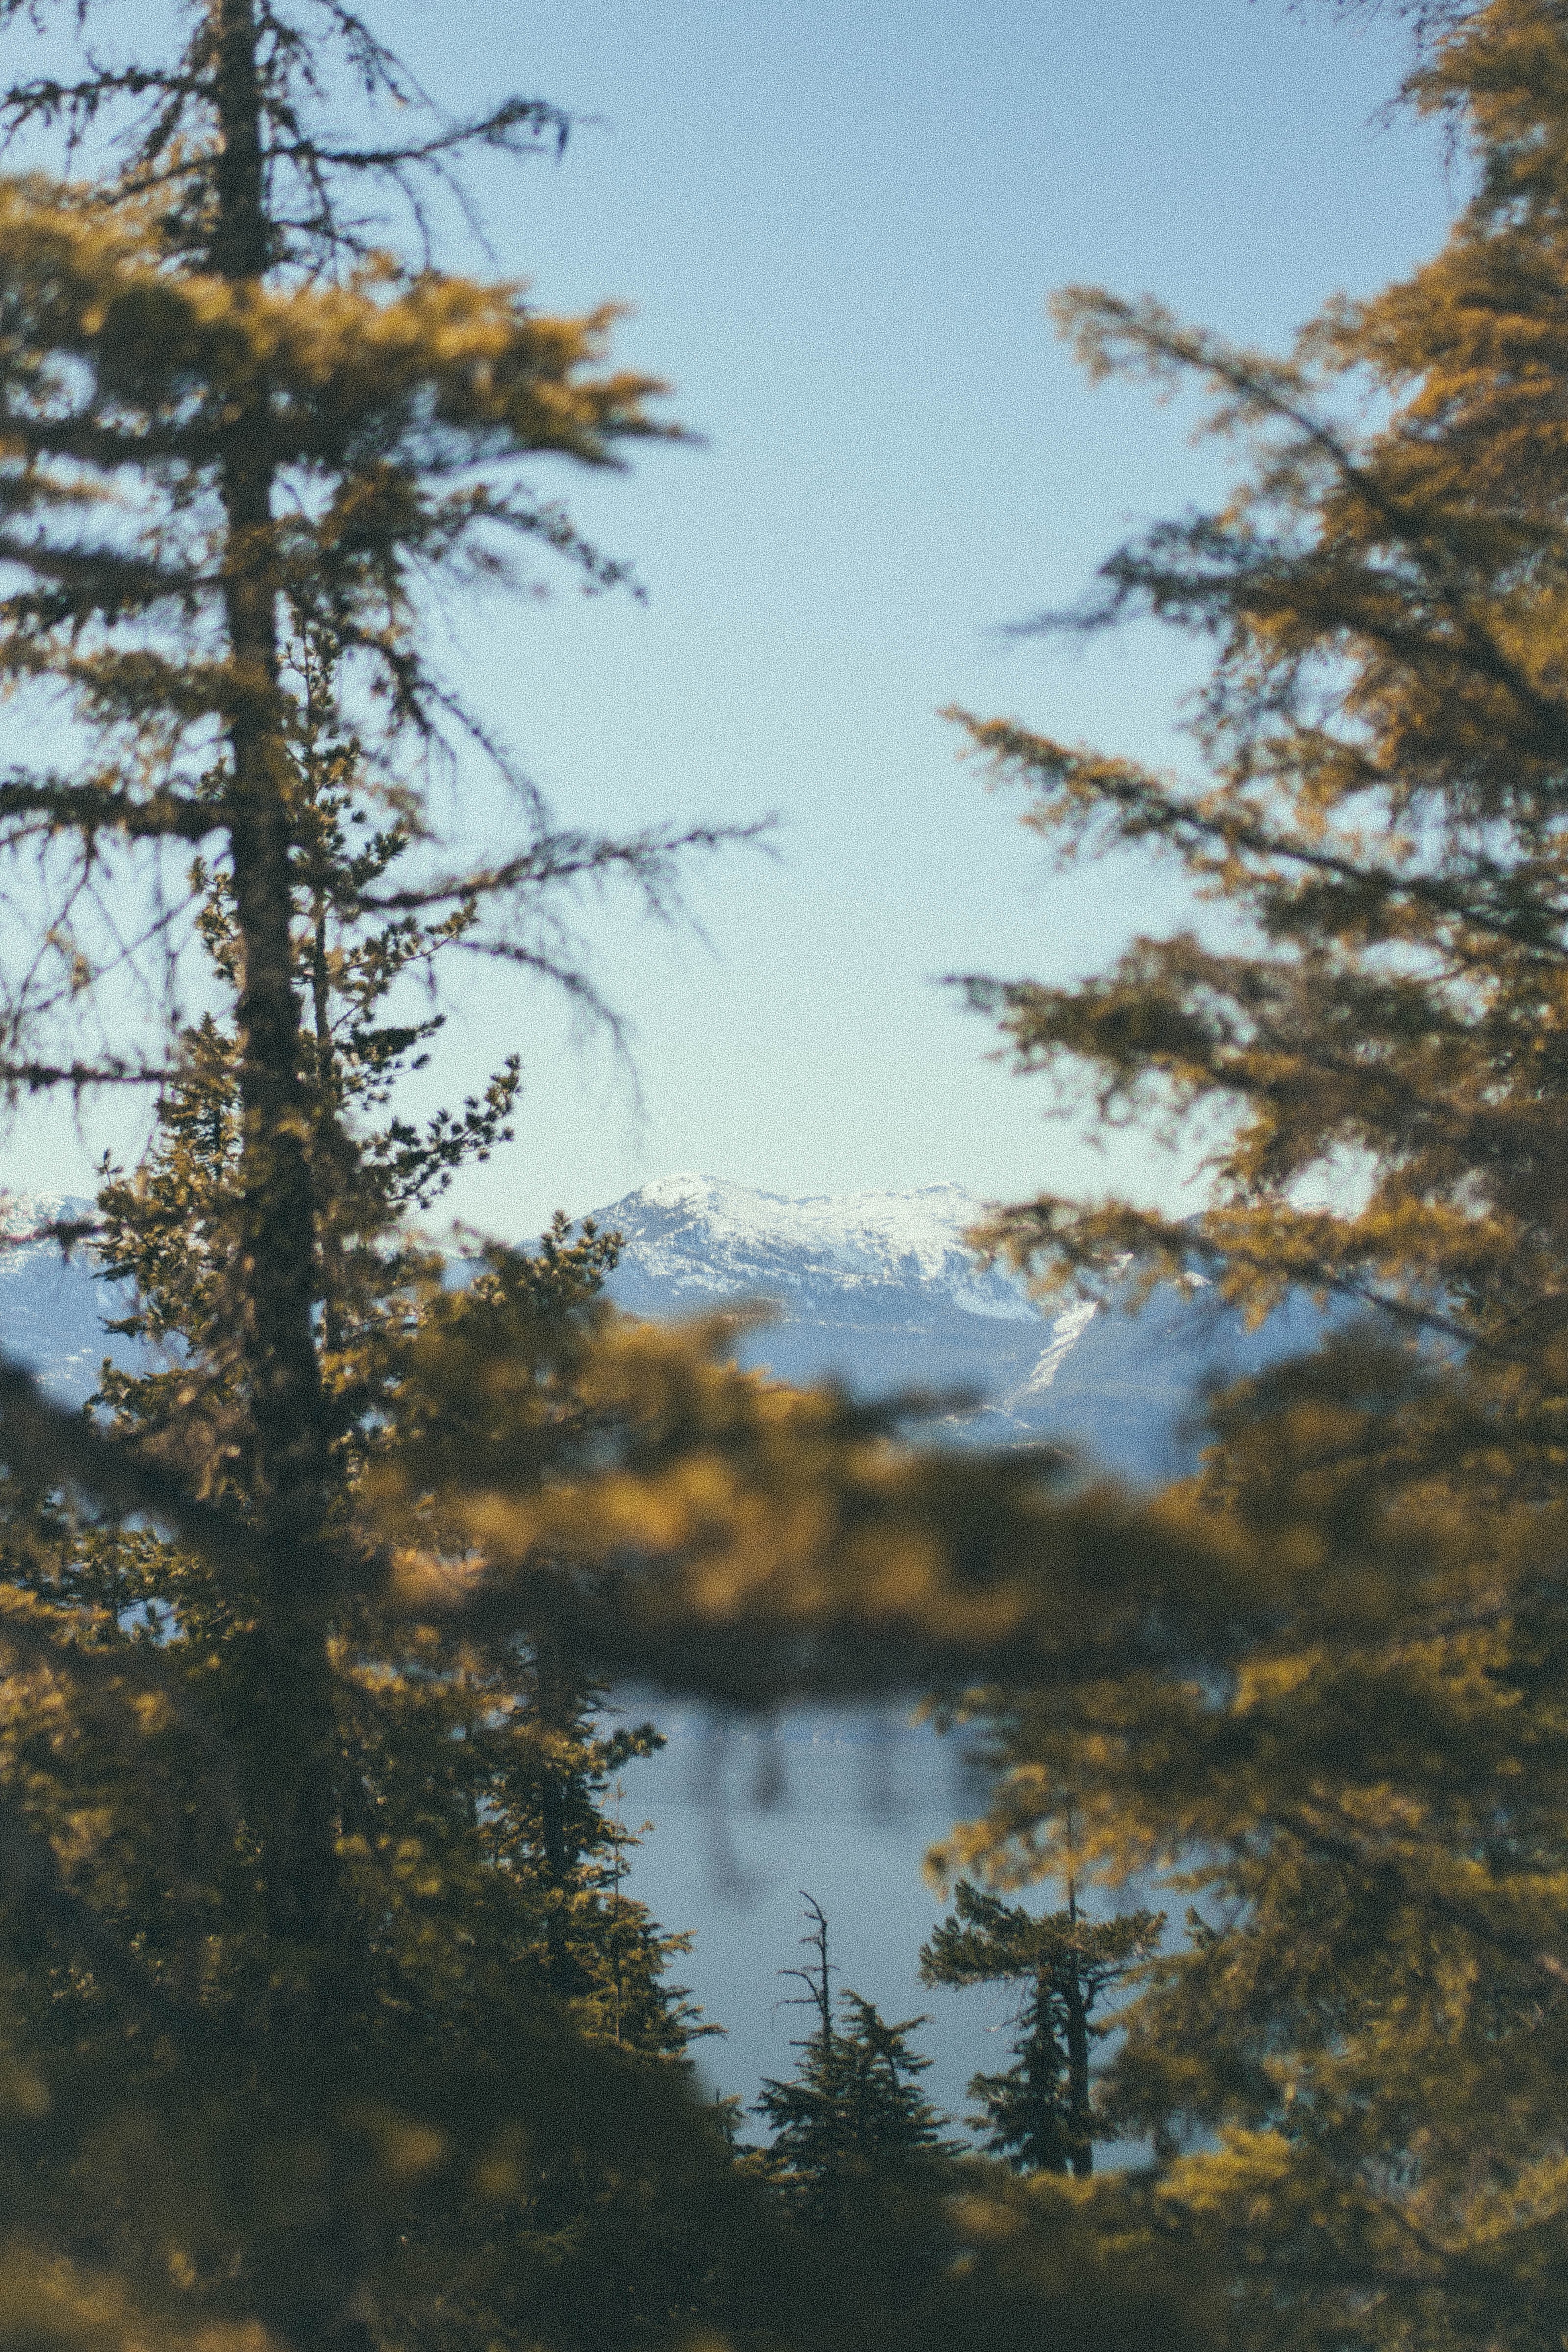 Peering through two trees looking at Whistler Mountain